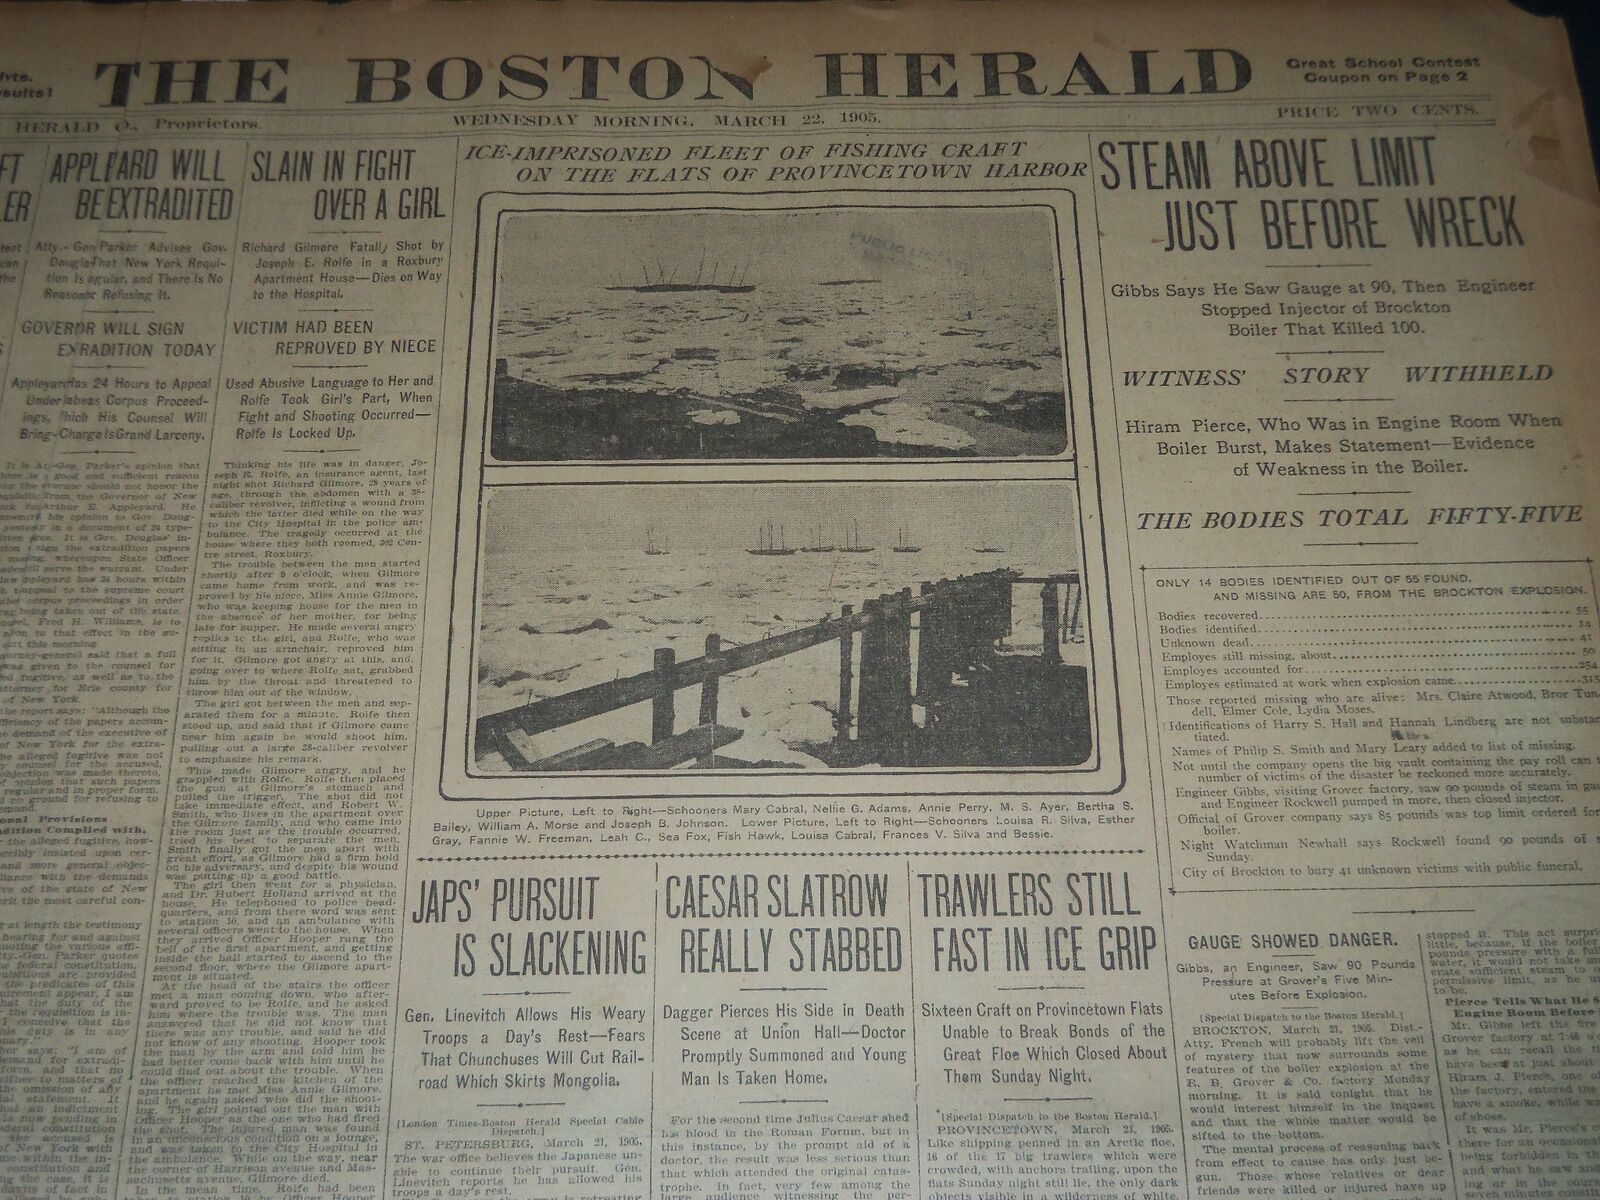 1905 MARCH 22 THE BOSTON HERALD - STEAM ABOVE LIMIT ON BROCKTON - BH 144